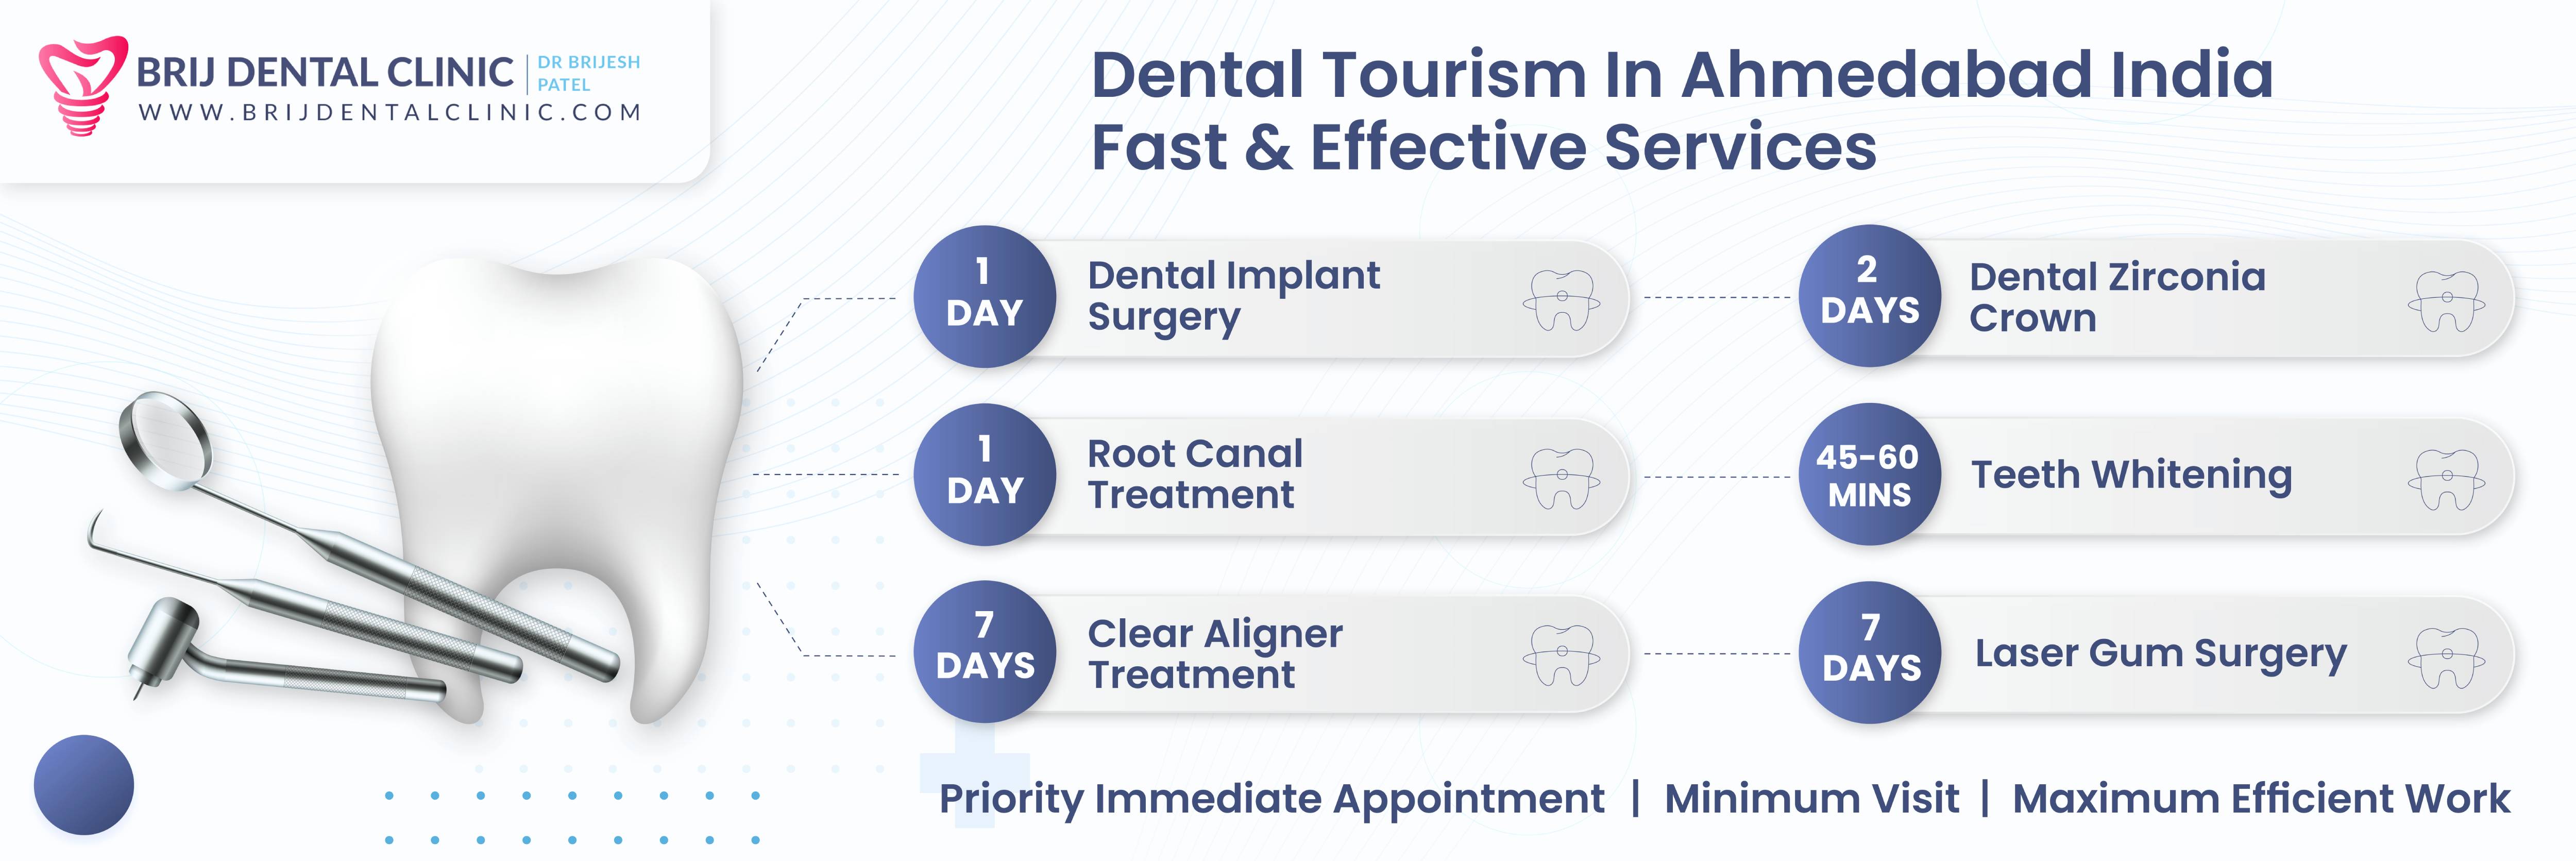 Dental Tourism in Ahmedabad India, Brij Dental